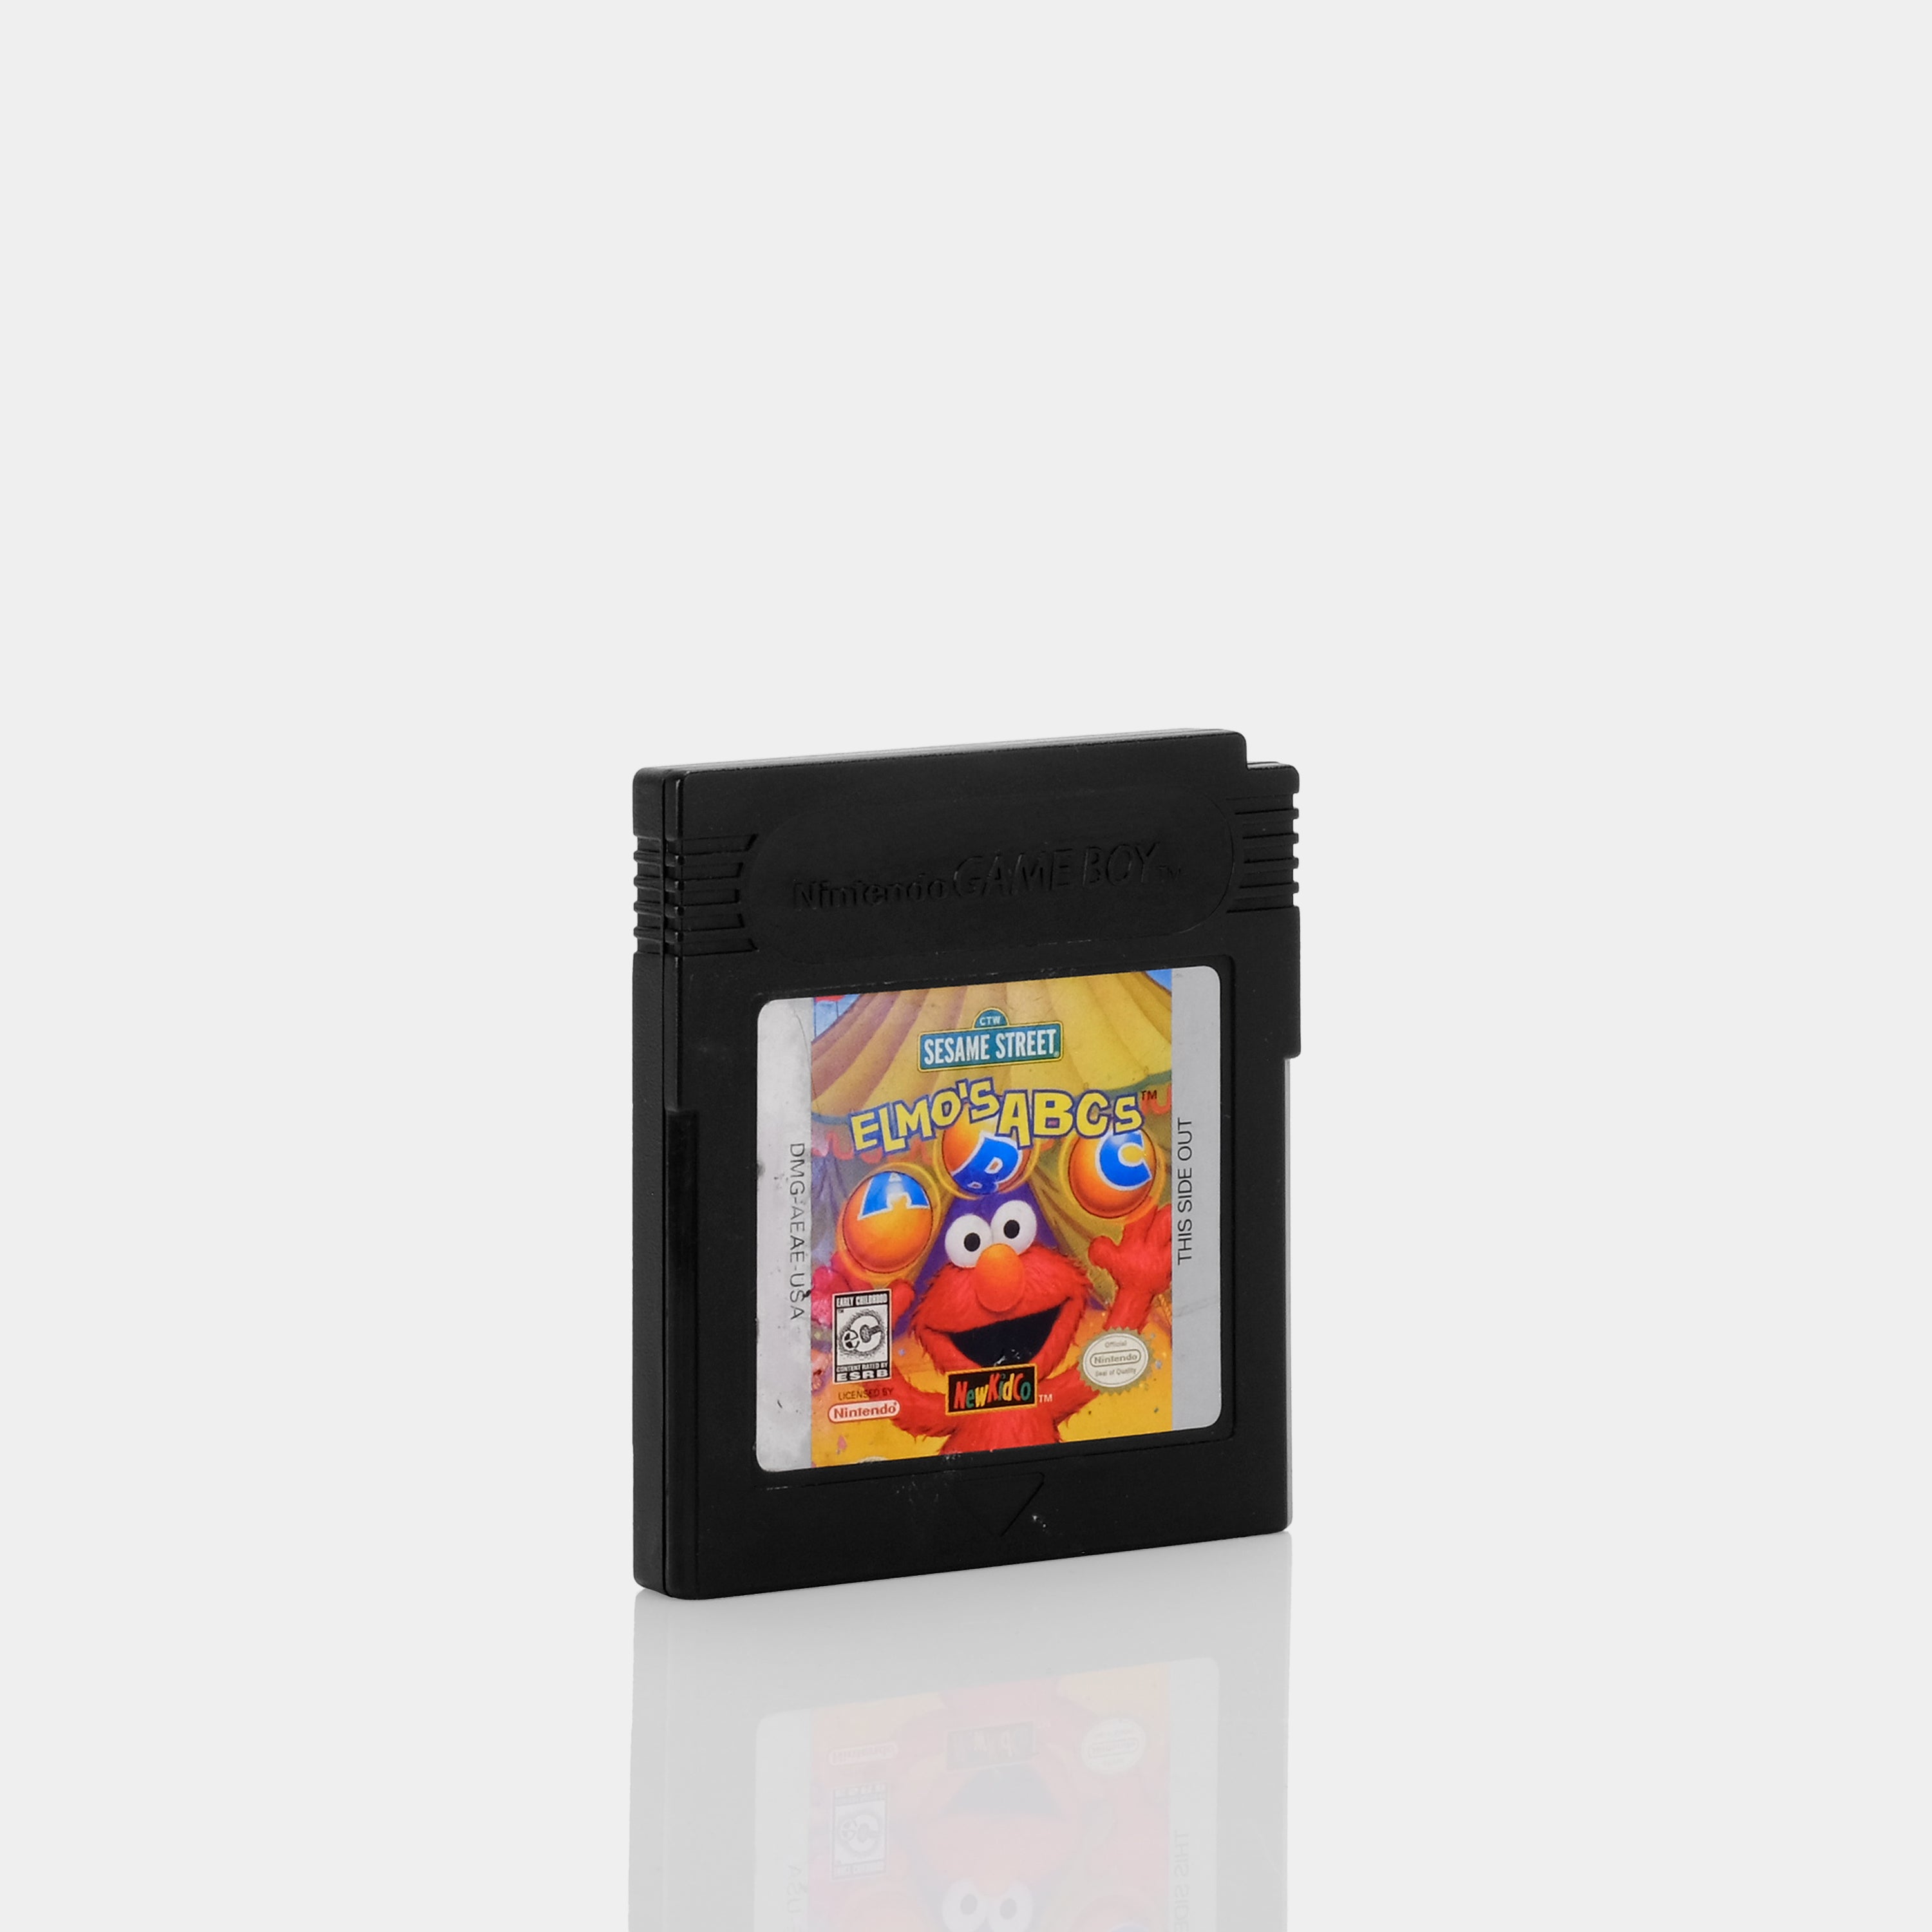 Sesame Street: Elmo's ABCs Game Boy Color Game